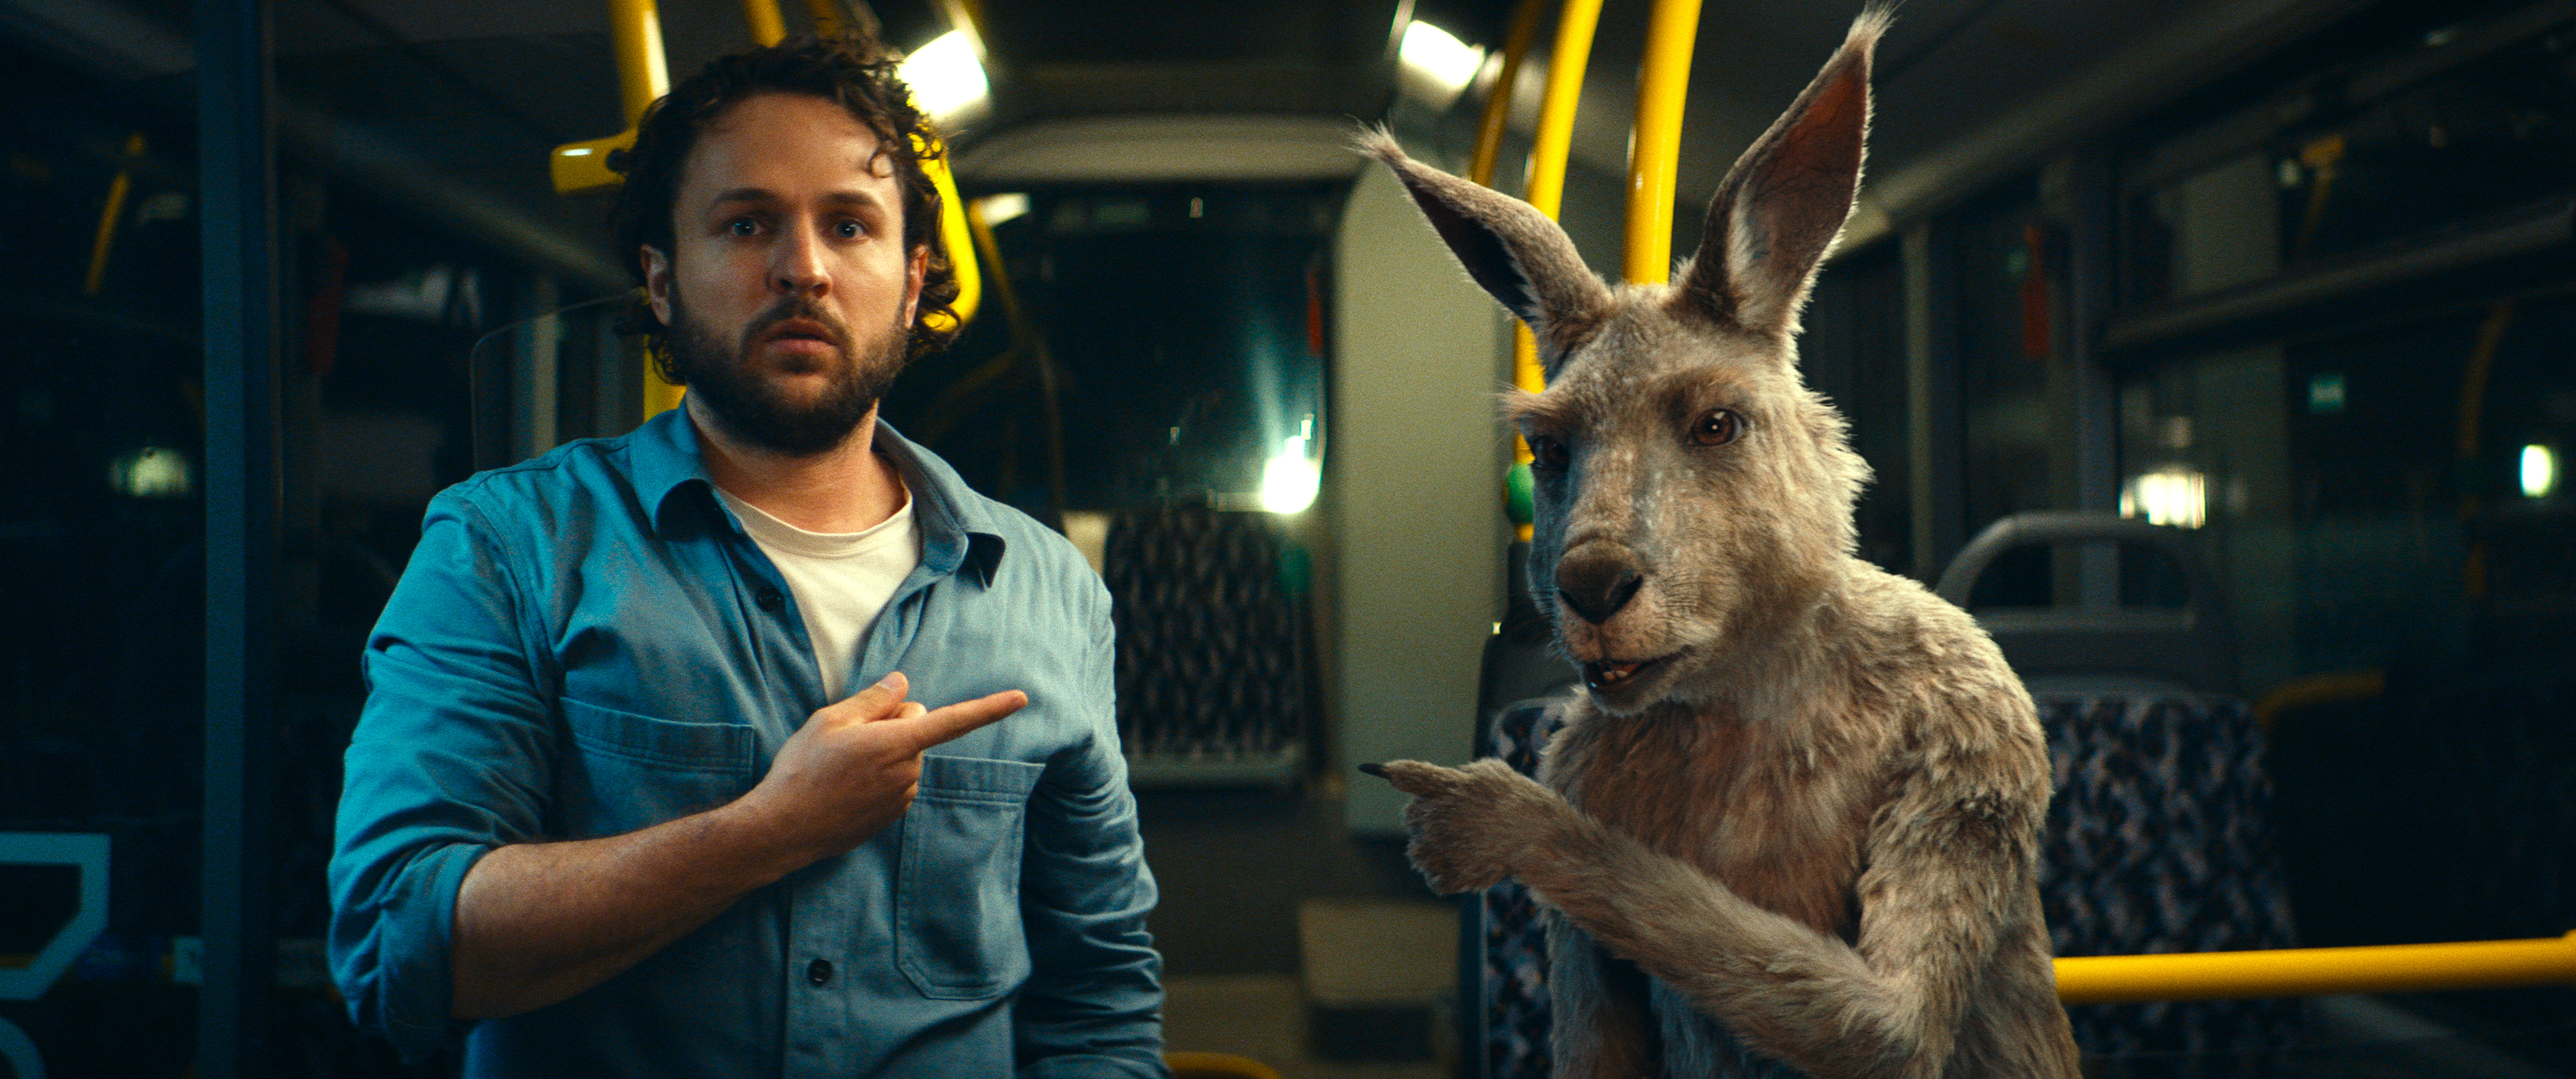 Kinotipp: Die Känguru-Verschwörung